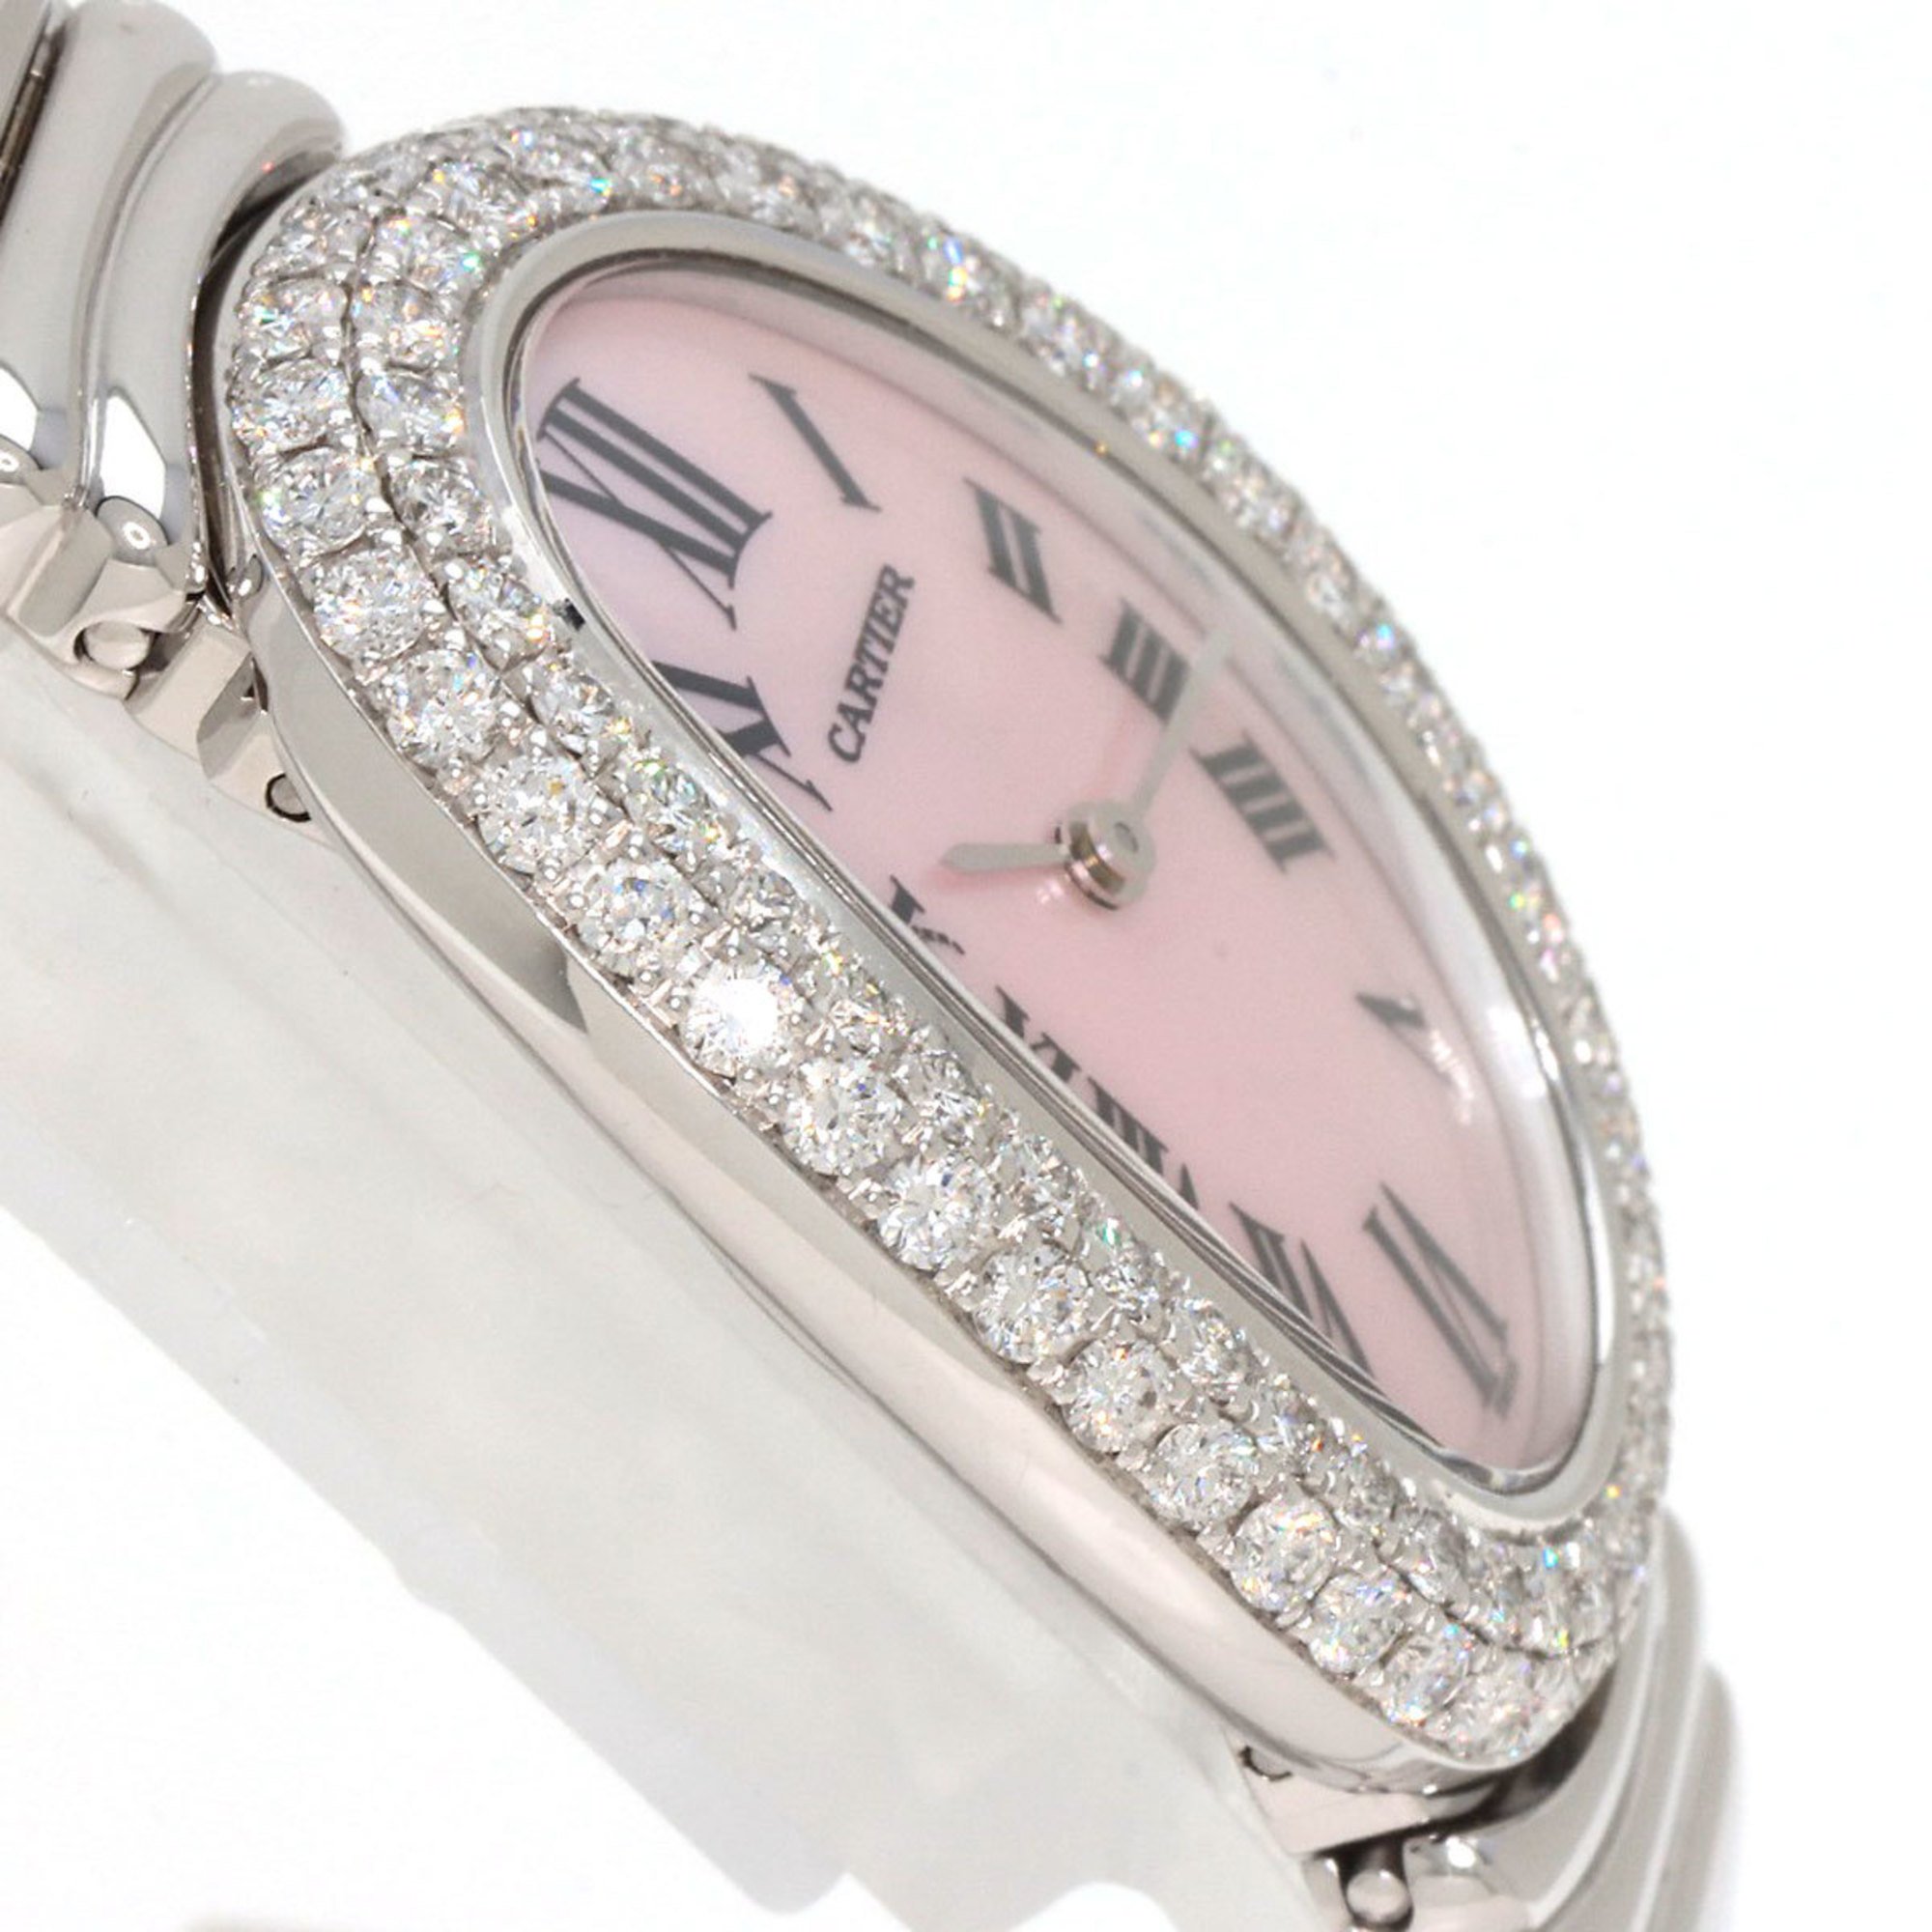 Cartier WB5097L2 Baignoire Bezel Double Diamond Watch K18 White Gold K18WG Ladies